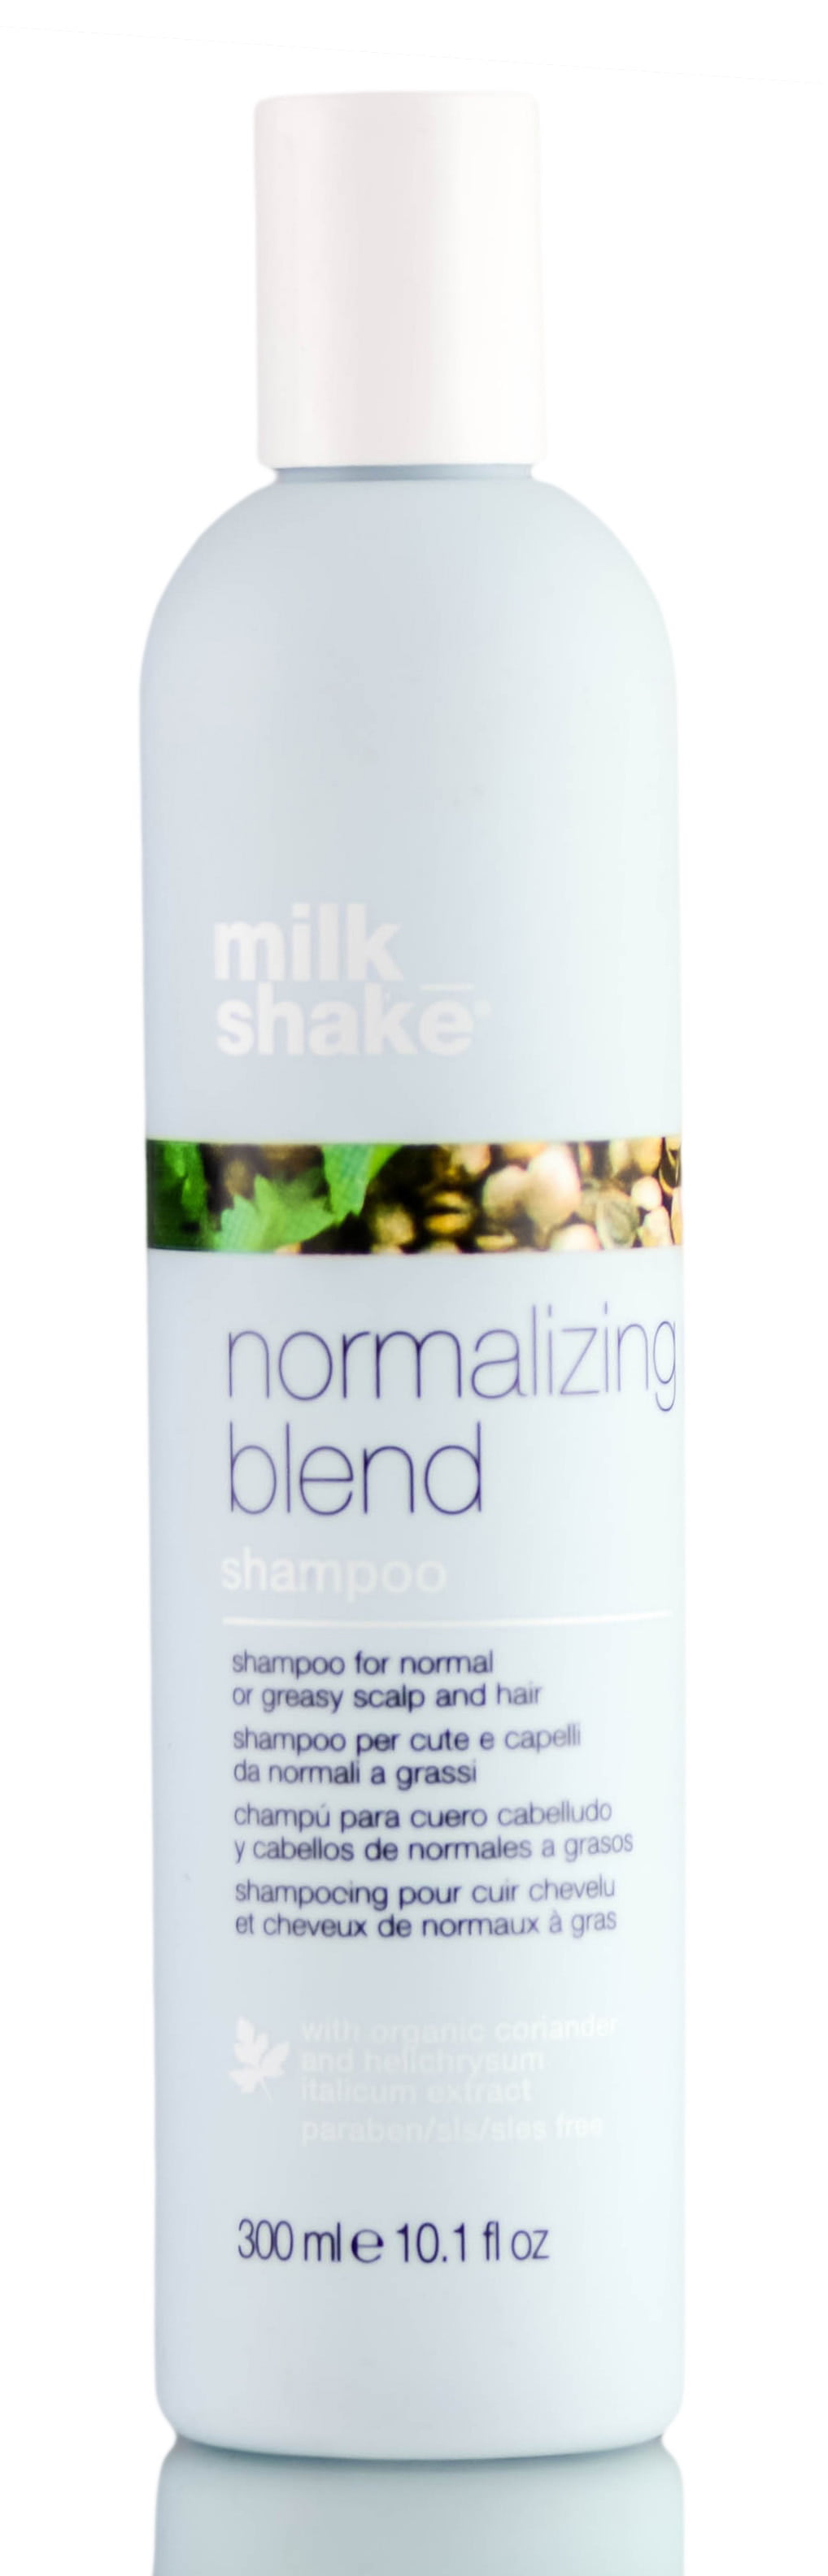 10.1 oz , Milkshake Normalizing Blend Shampoo, Milk Shake Scalp - Pack of 1 w/ Sleek Teasing Comb - Walmart.com